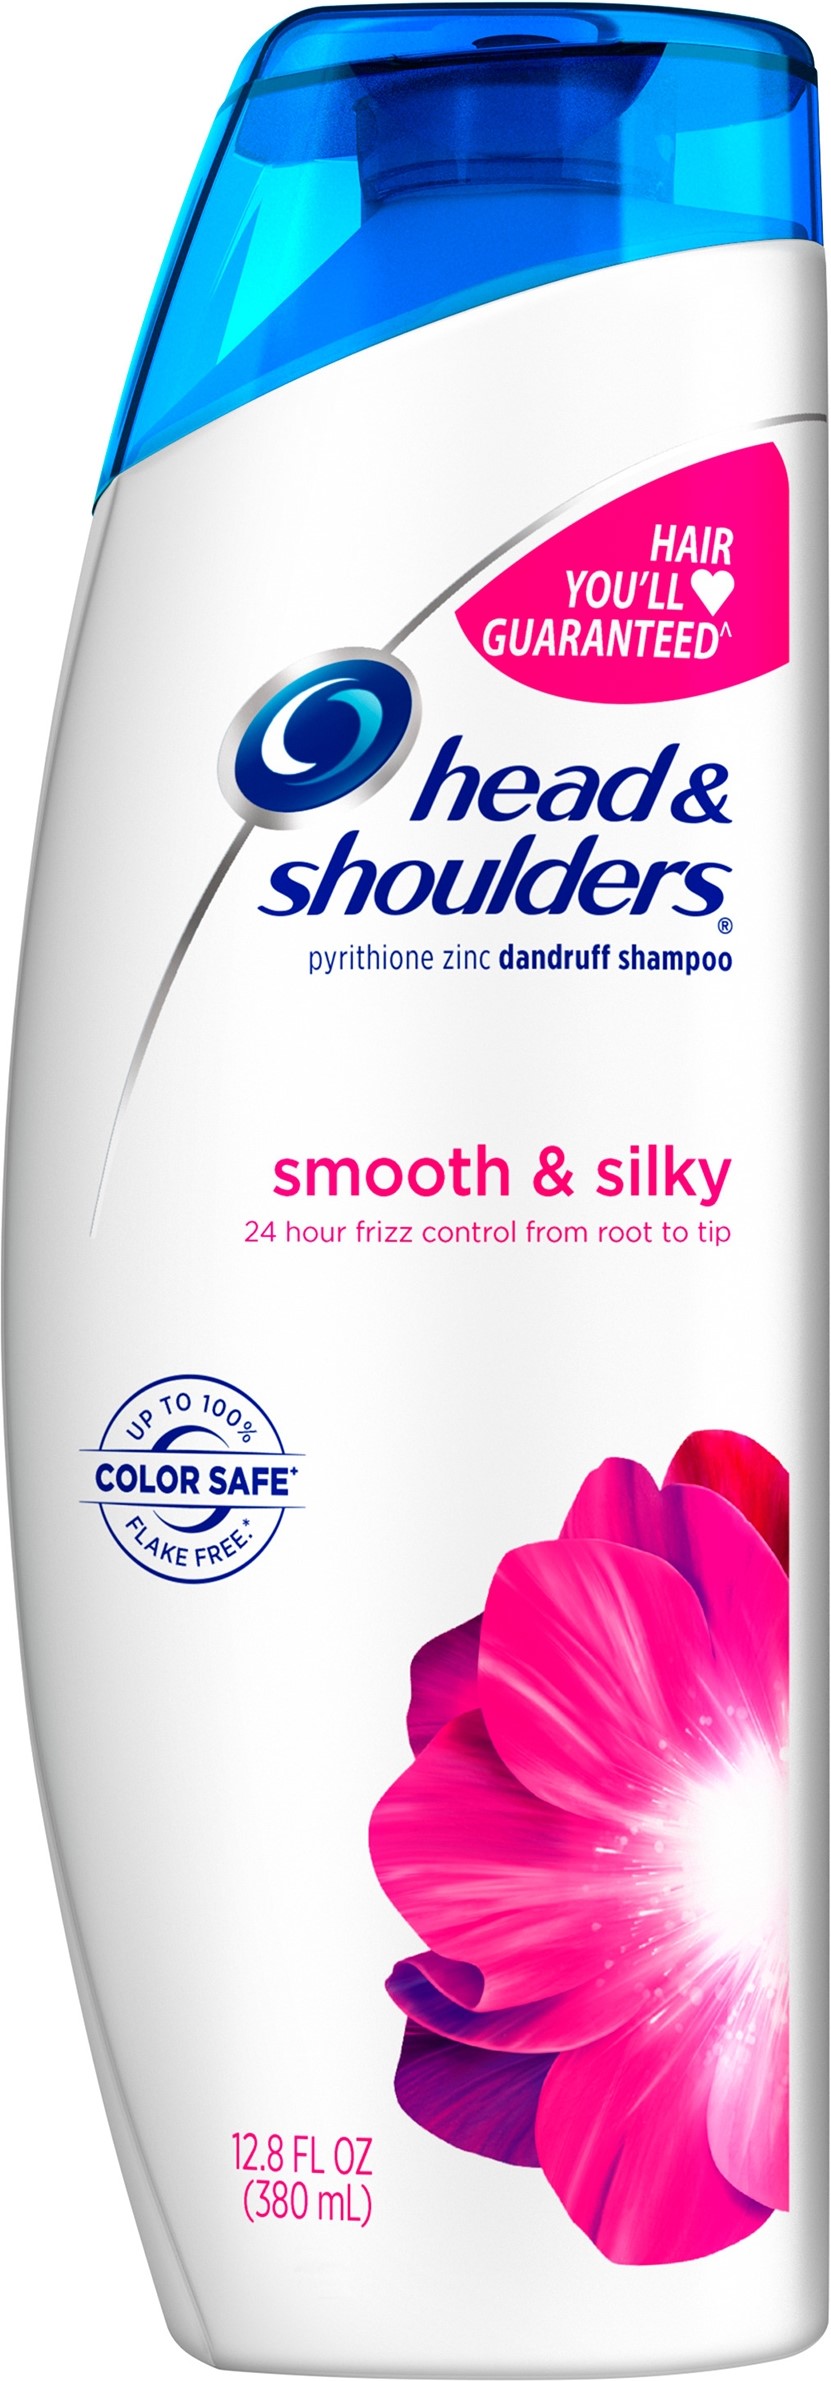 Head & Shoulders Dandruff Shampoo, Smooth & Silky 13.5 oz - image 1 of 2